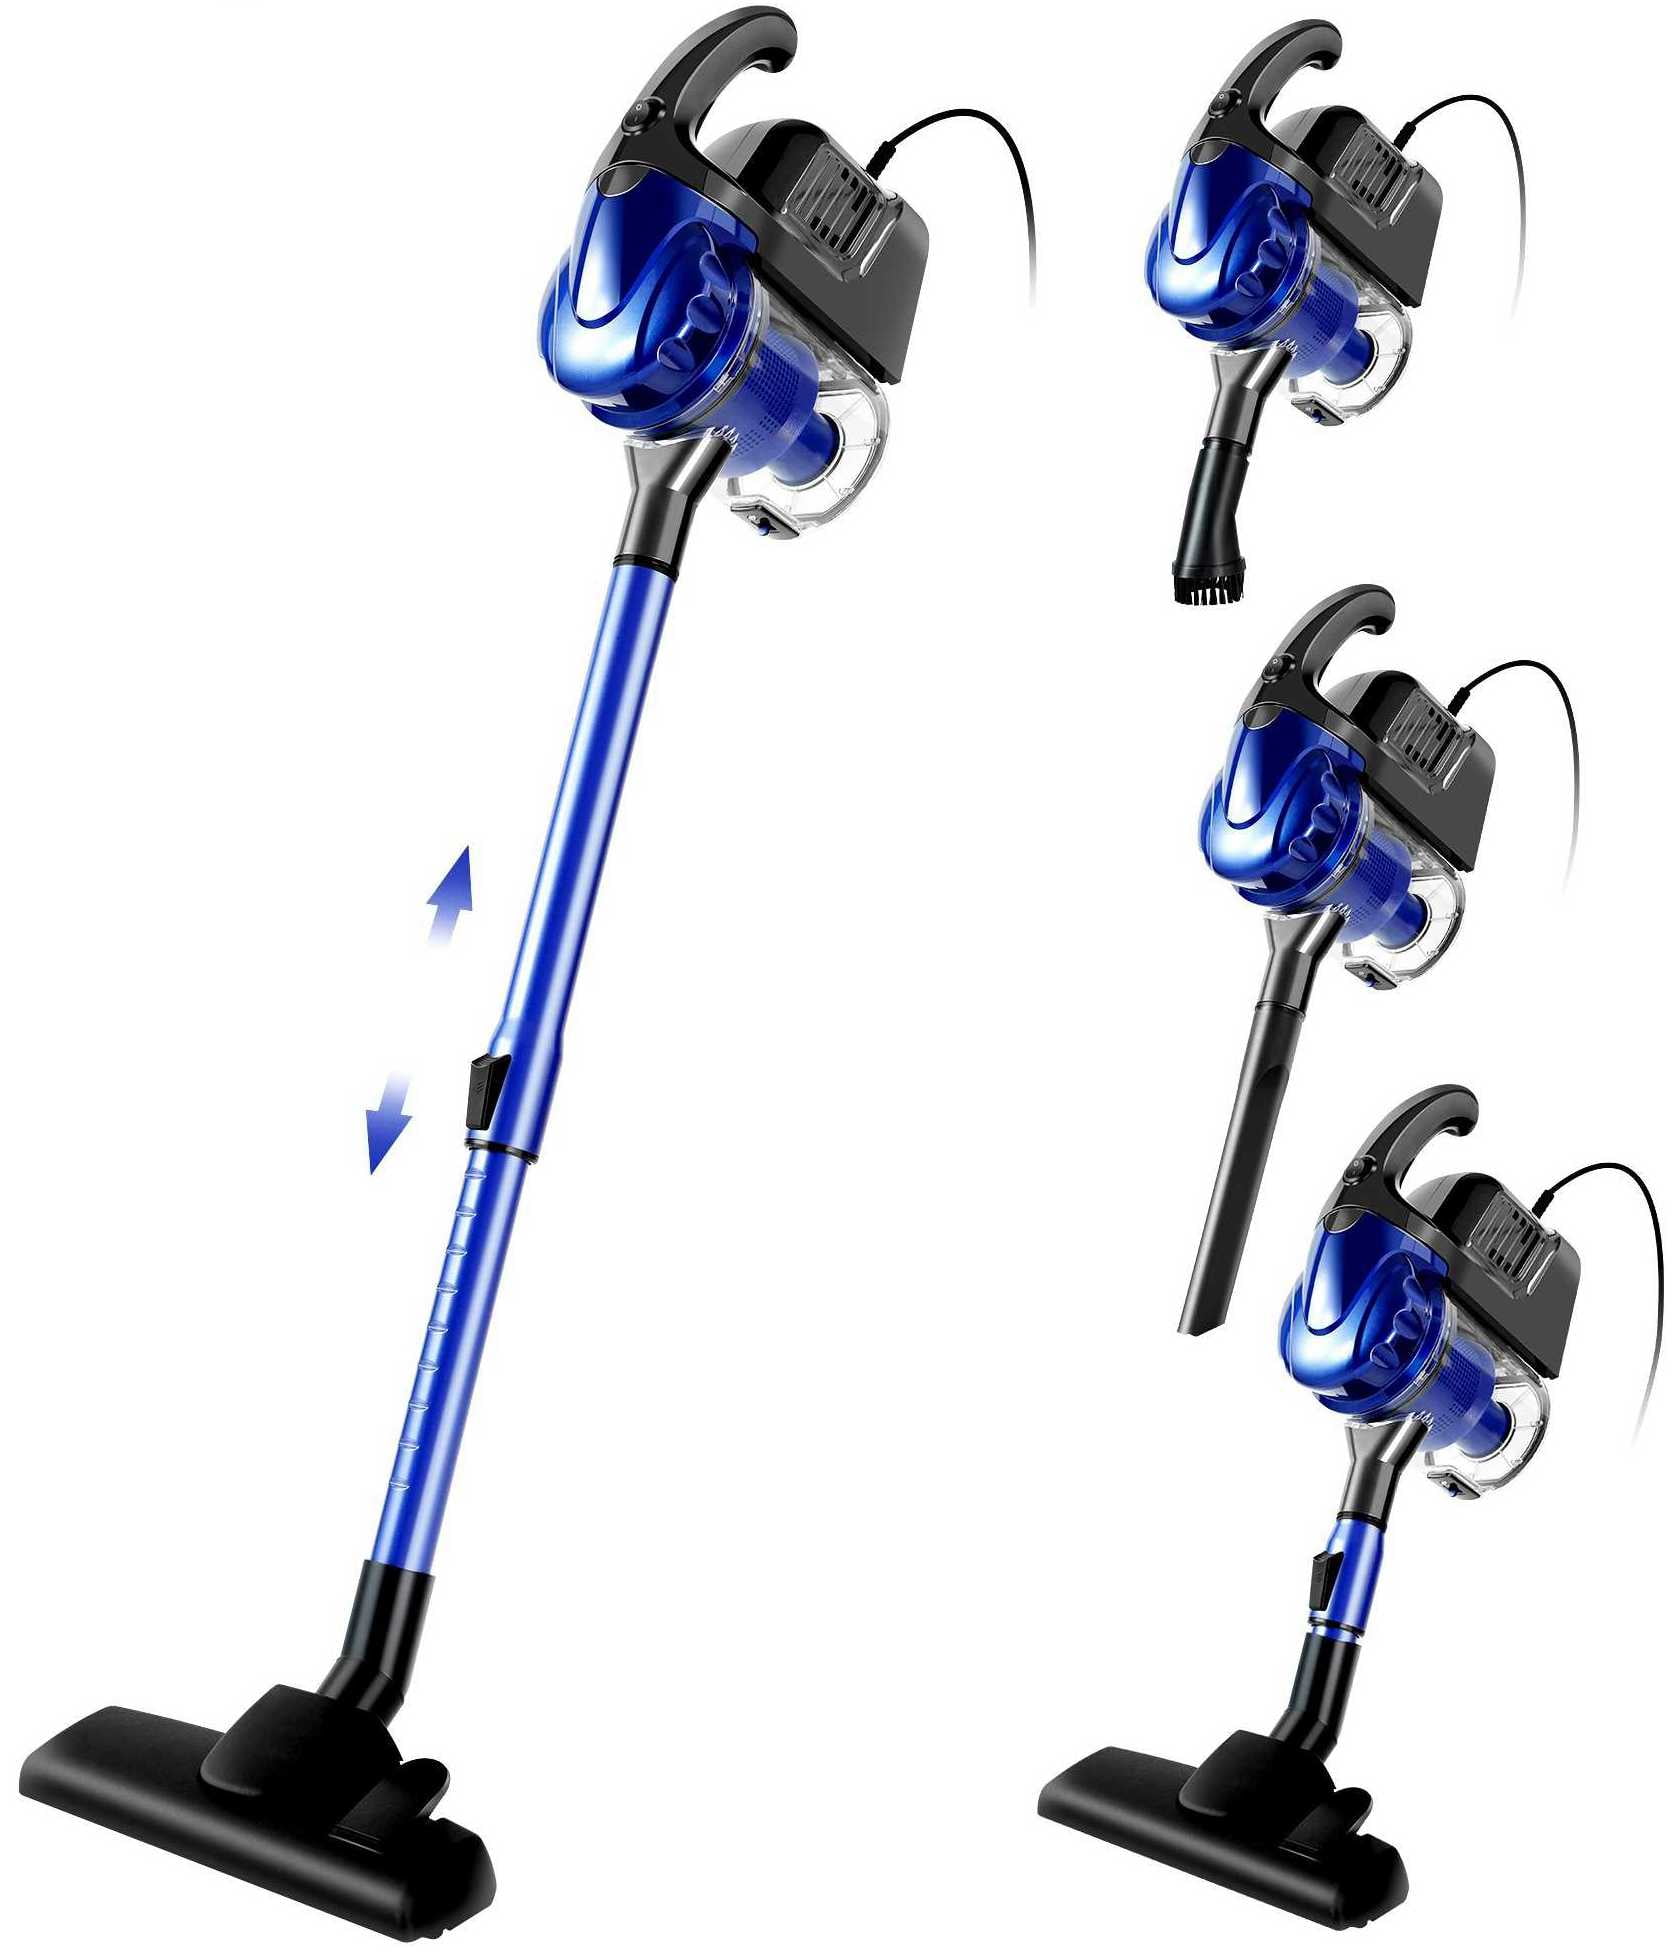 Black & Decker Brush Roll-On Central Robot Vacuum Cleaner BXRV500E  ES9480020B